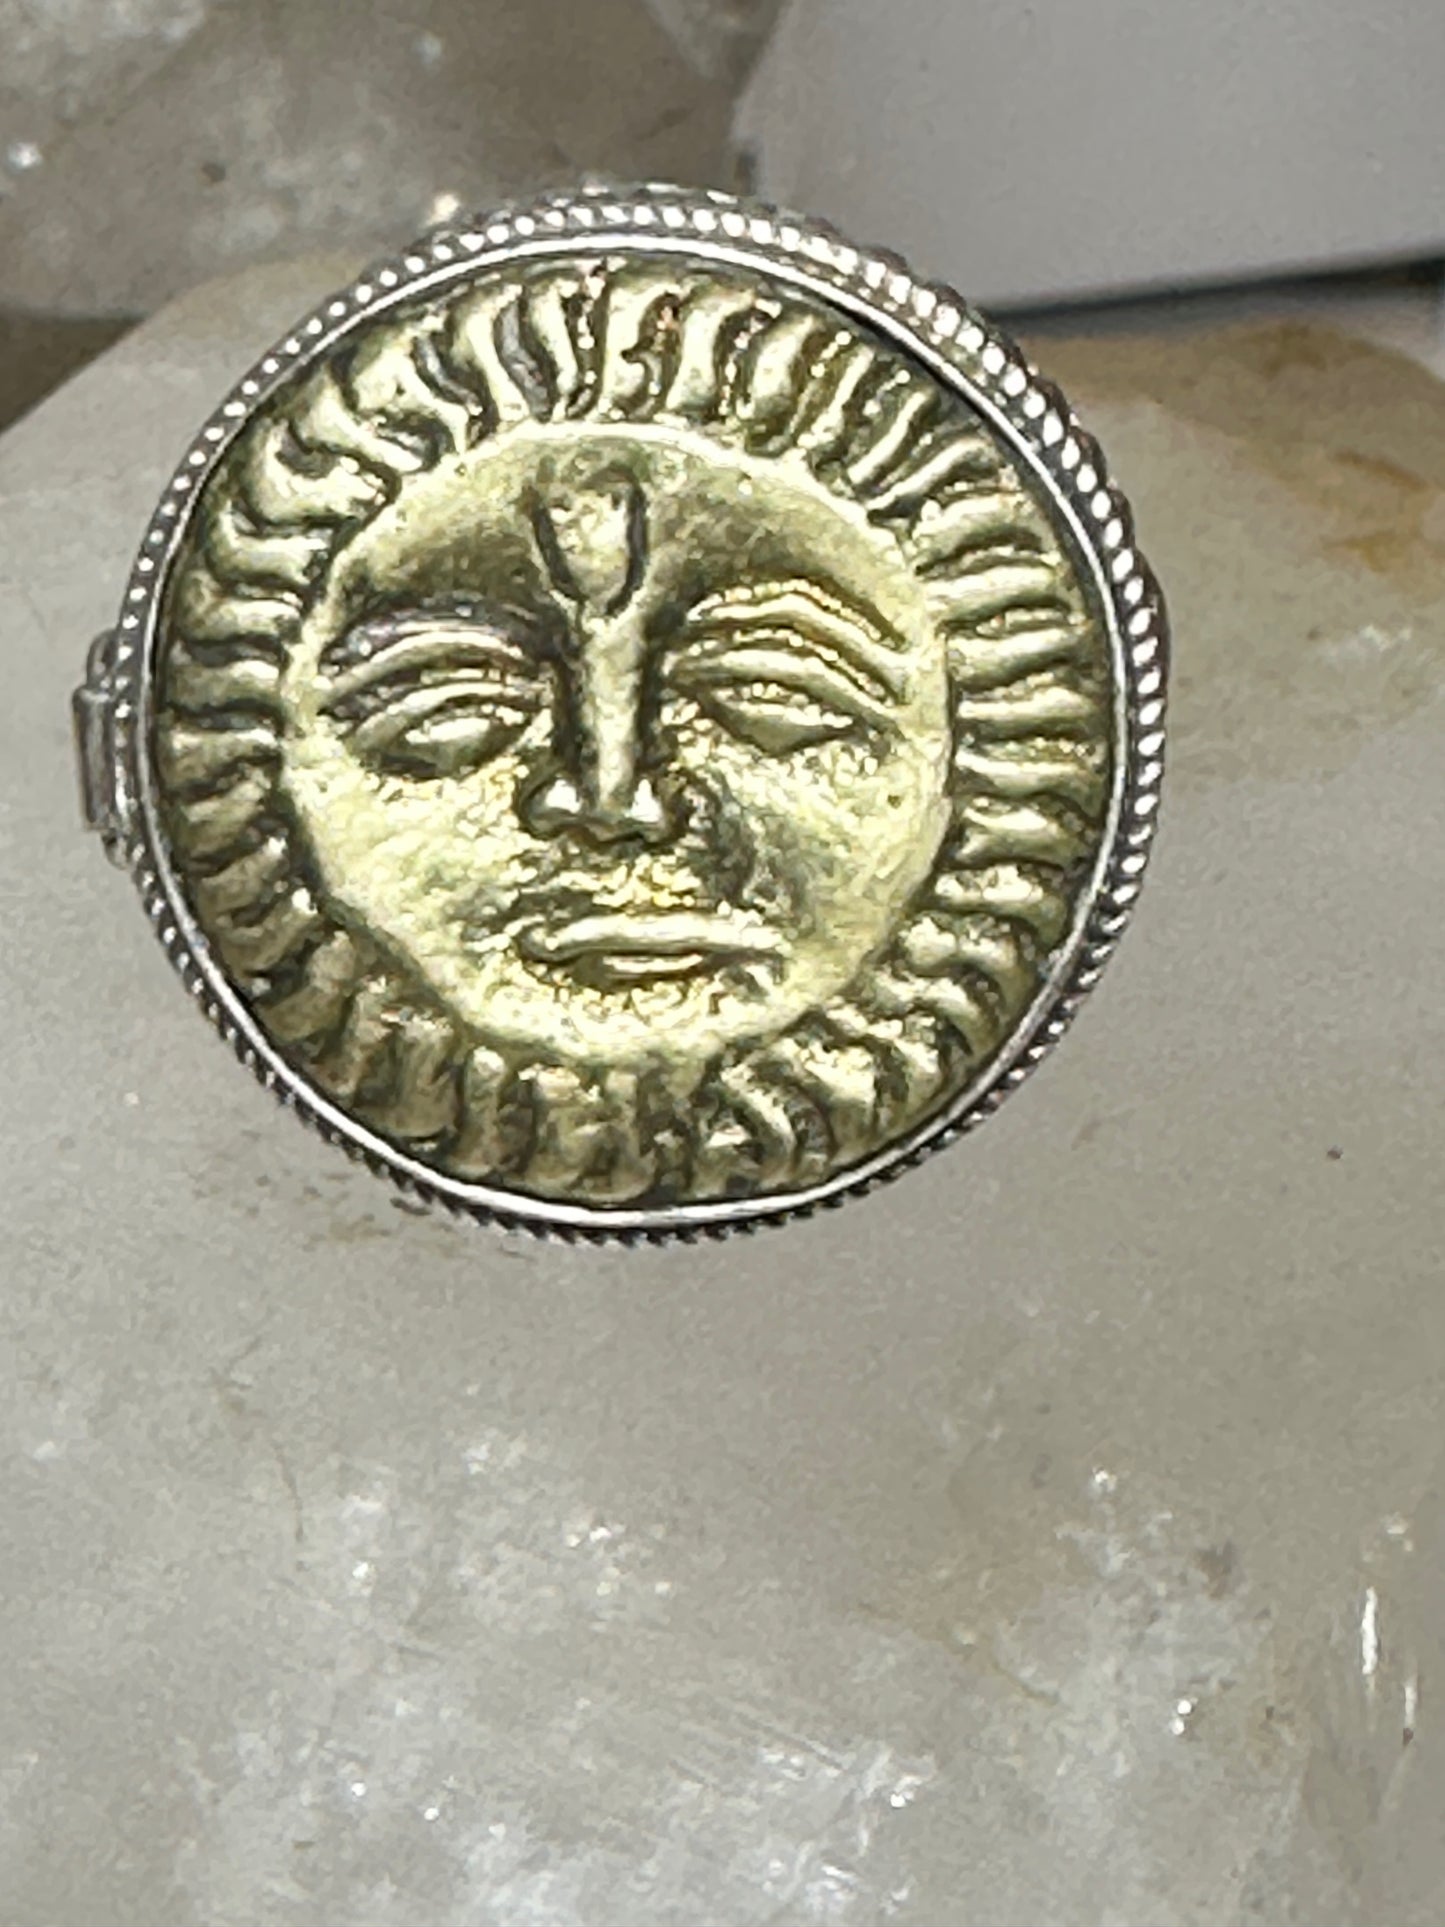 Poison ring size 7.50 Sun face celestial sterling silver women